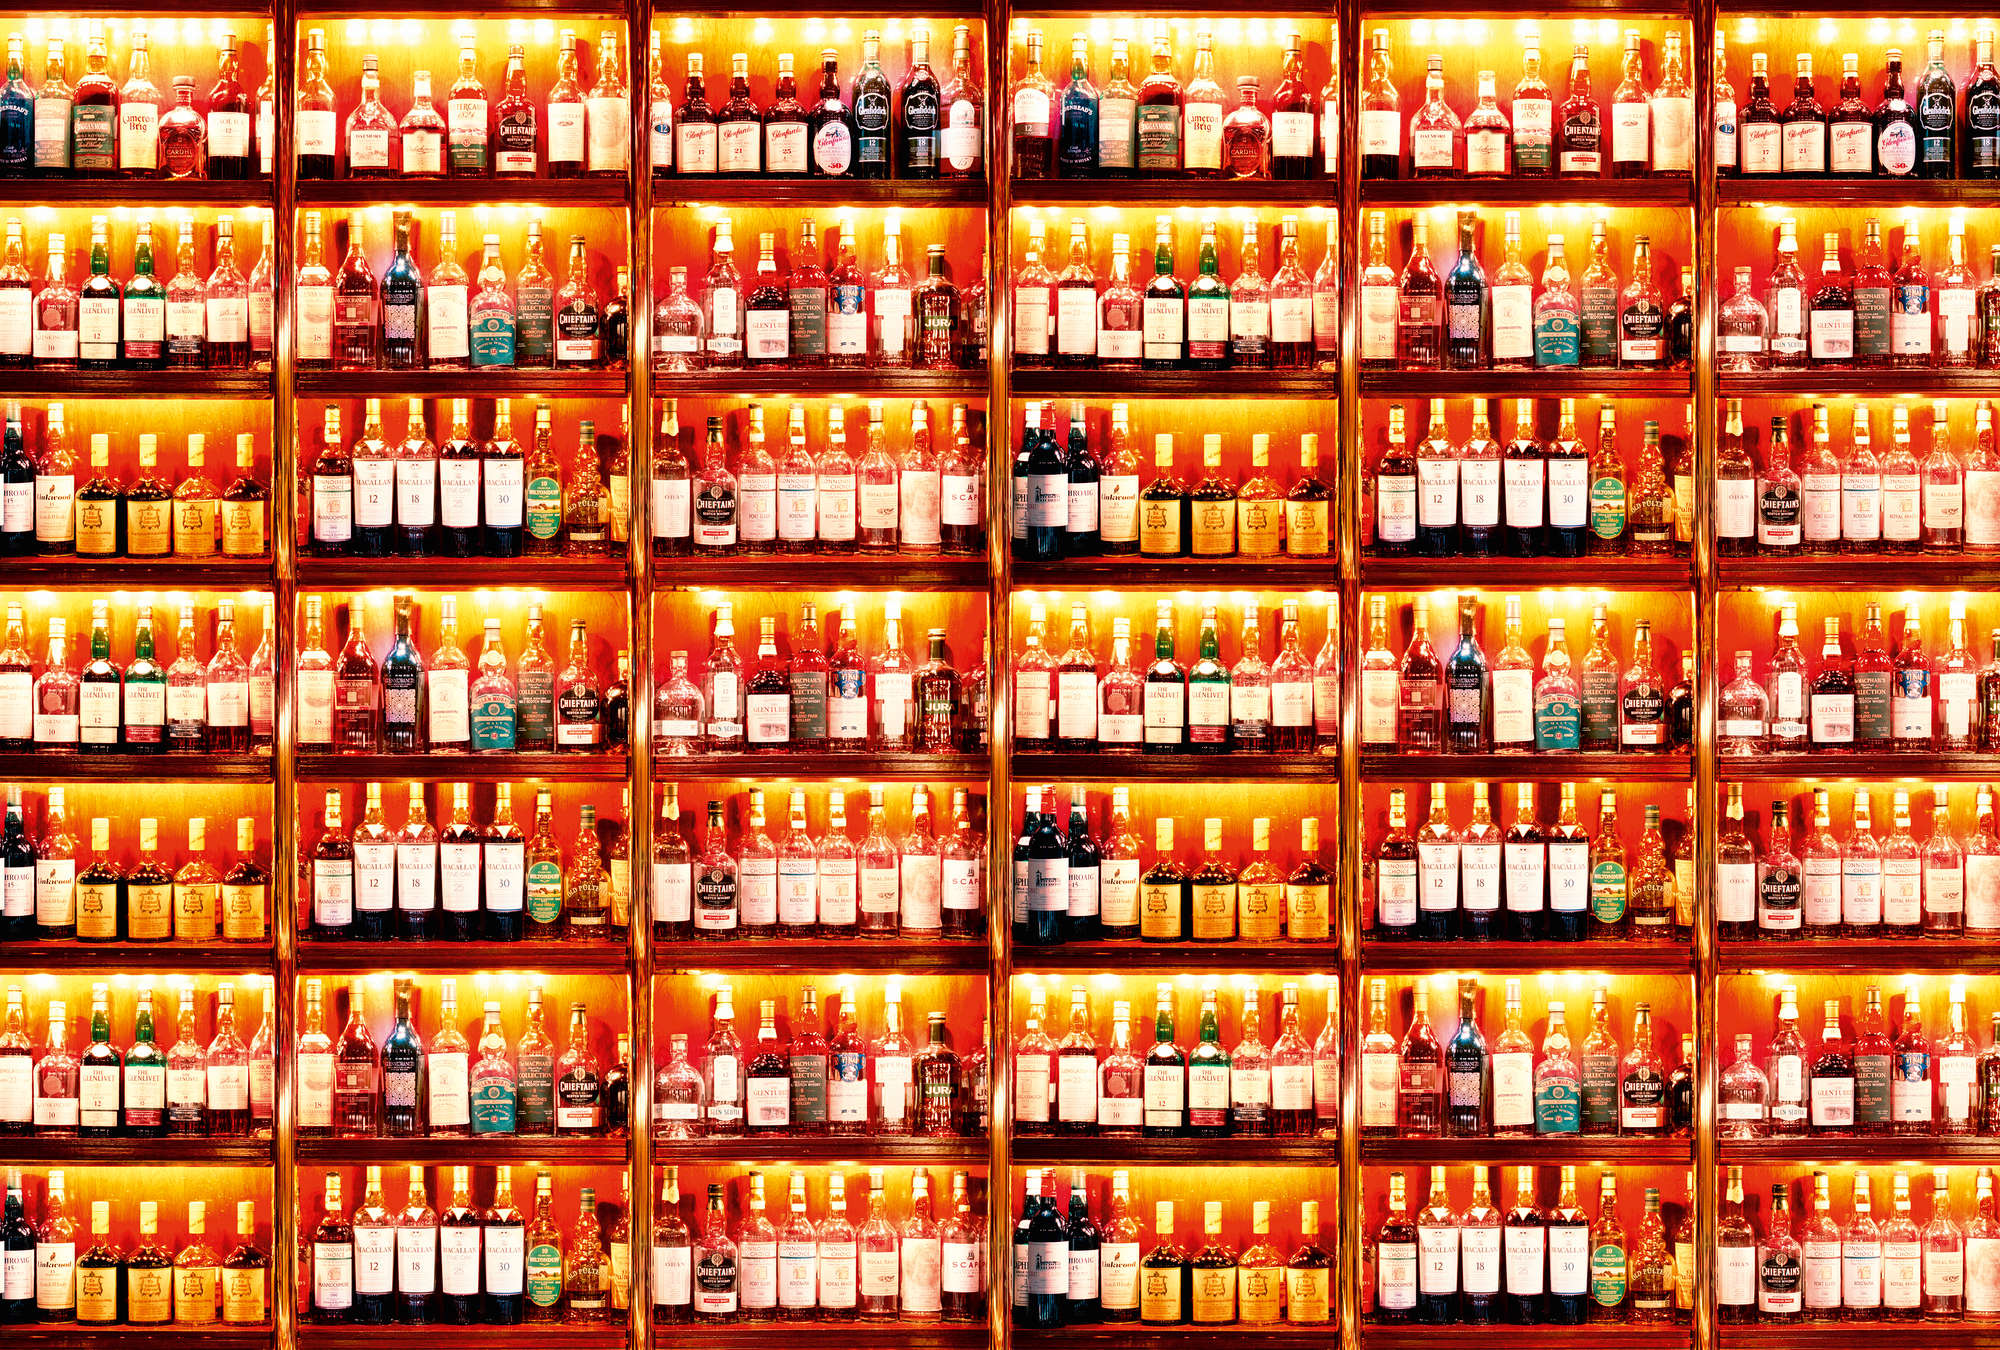             Bottle shelf - photo wallpaper bar motif spirit shelf
        